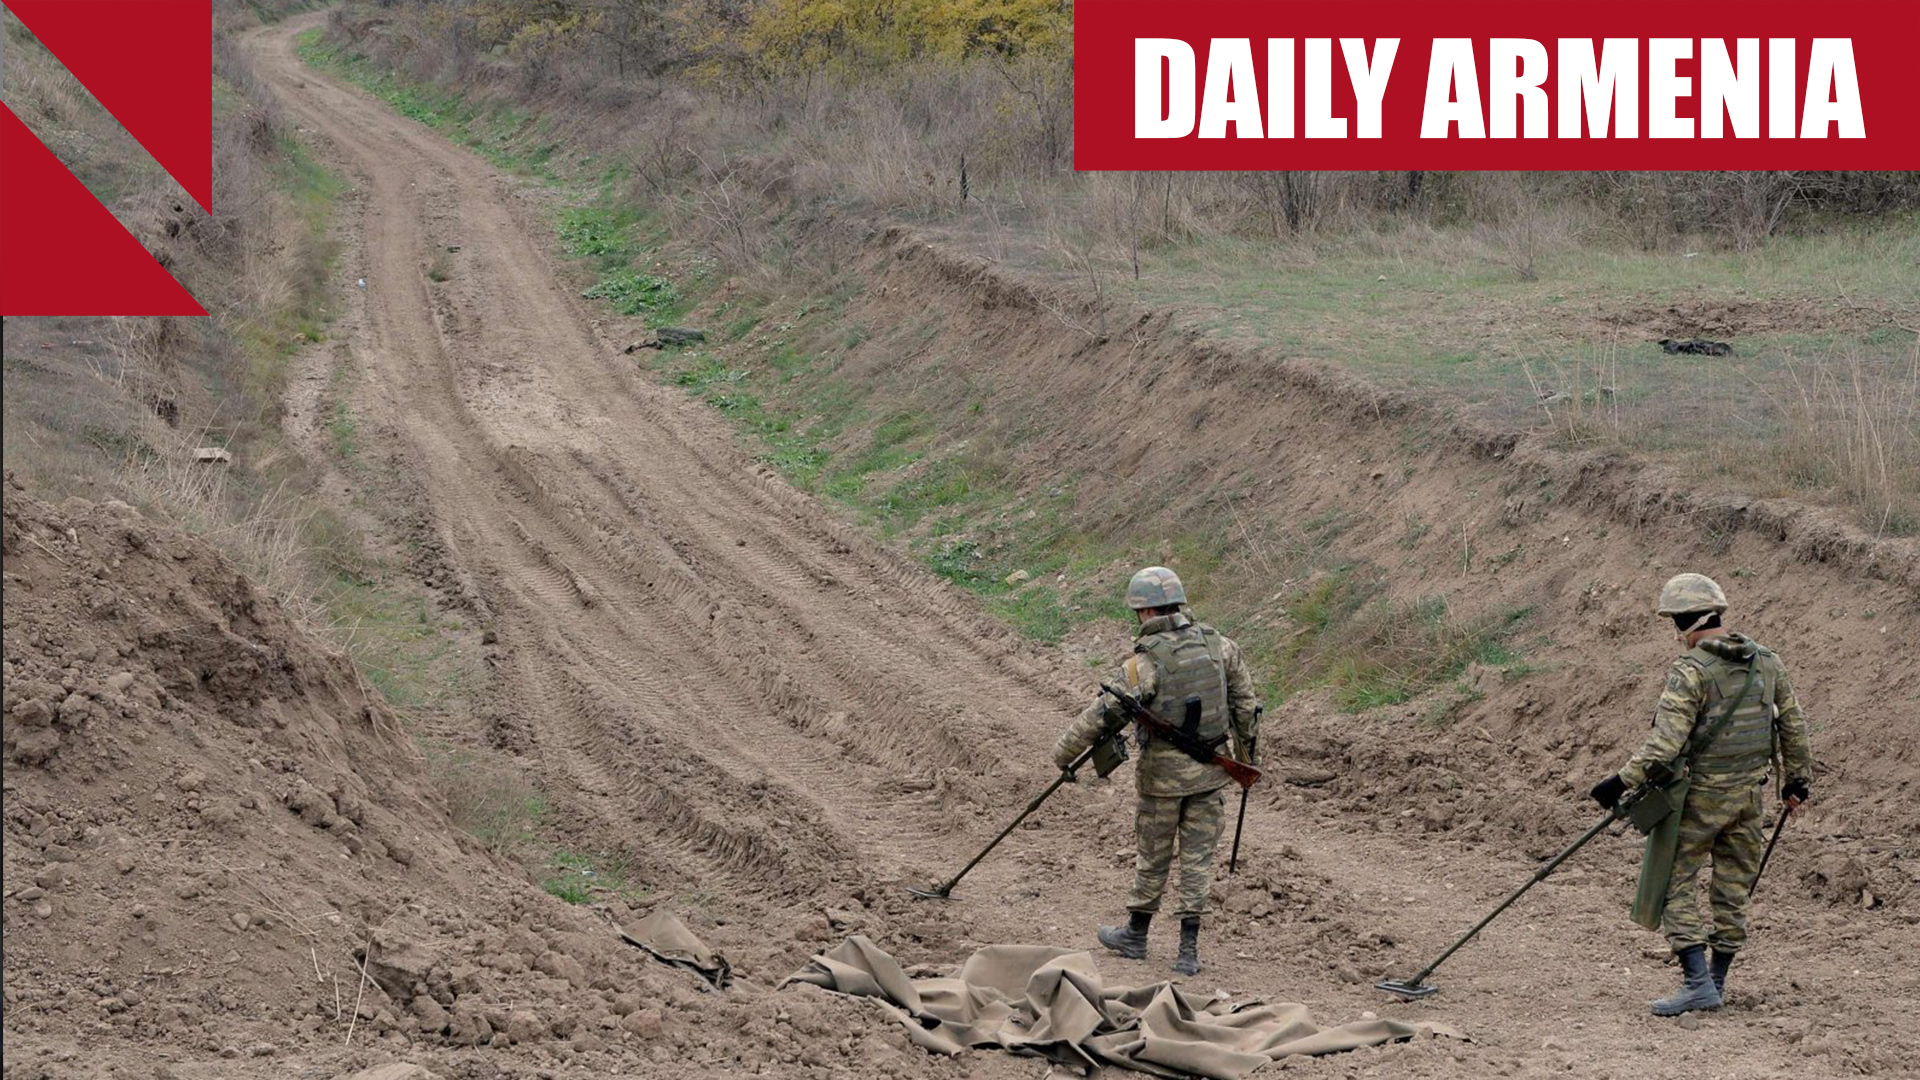 Armenia to provide Azerbaijan with new landmine maps in “confidence-building step”